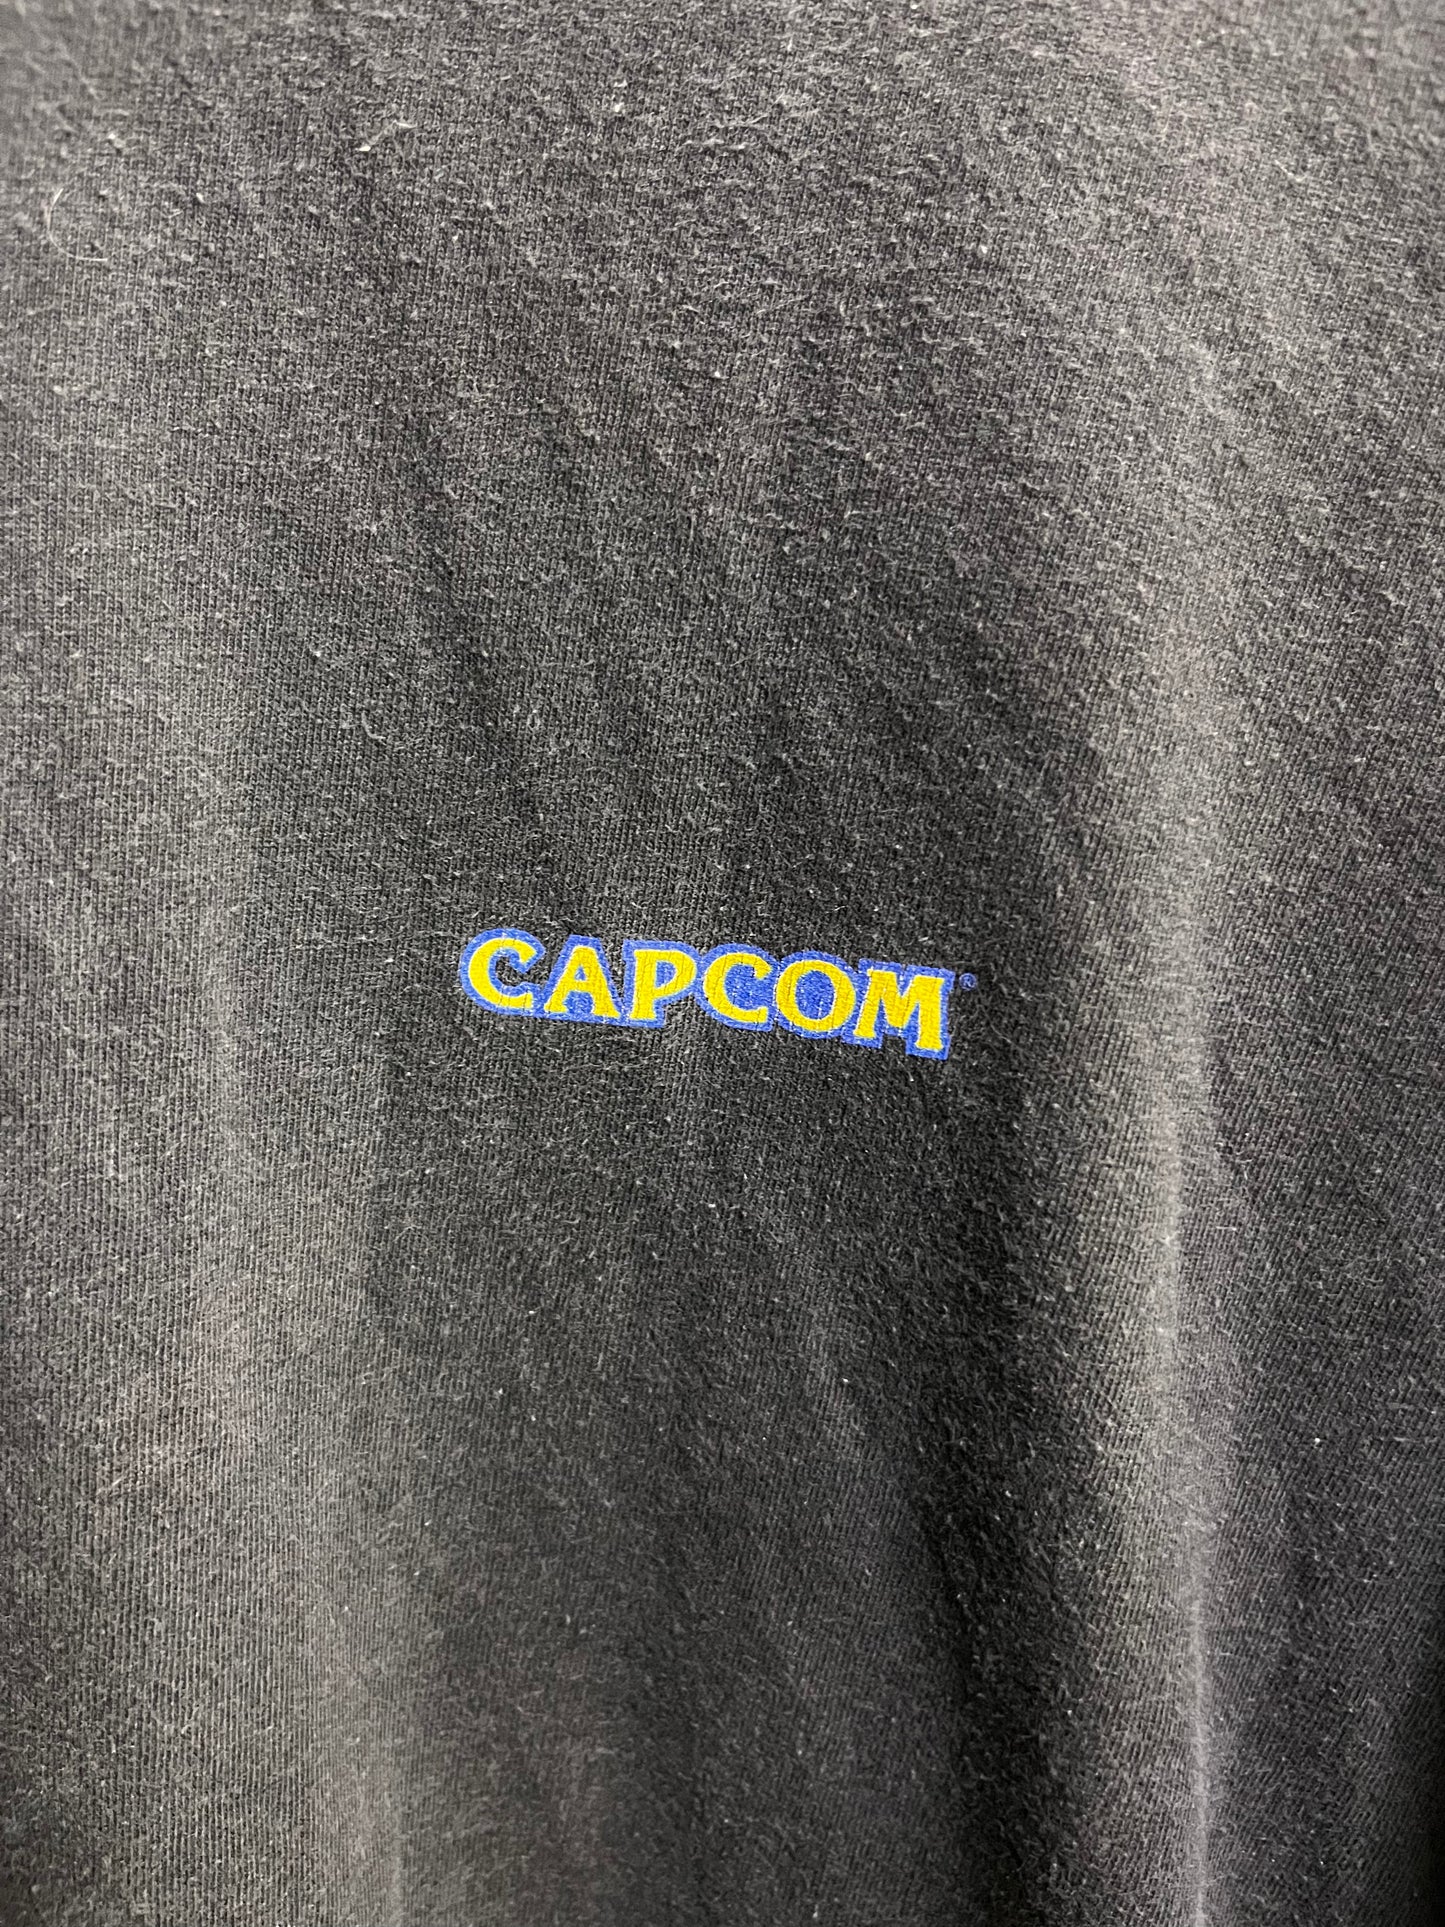 2000s Onimusha Capcom T shirt